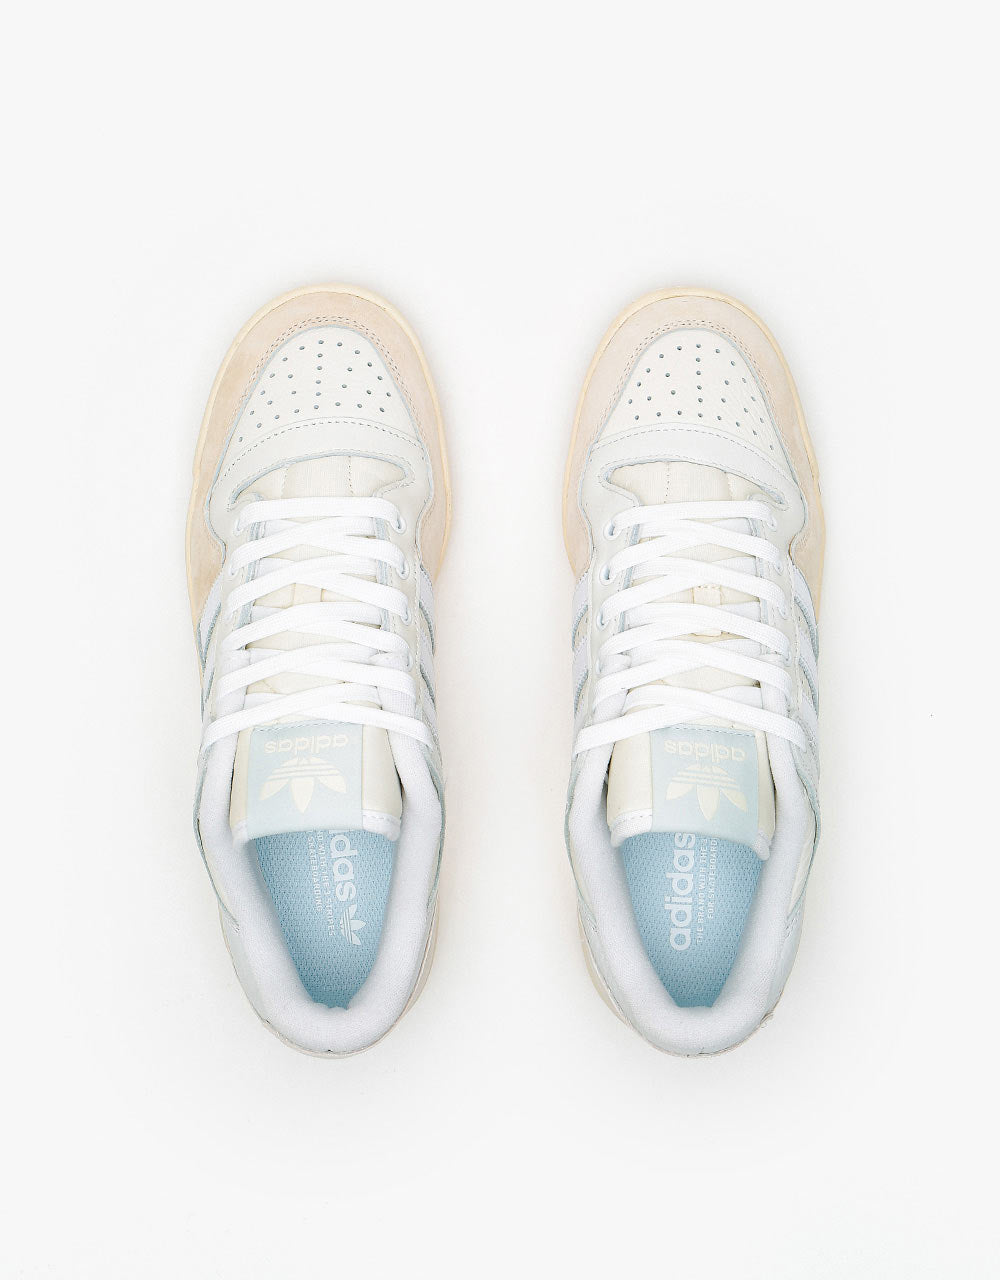 adidas Forum 84 Low ADV Skate Shoes - Chalk White/White/Cloud White